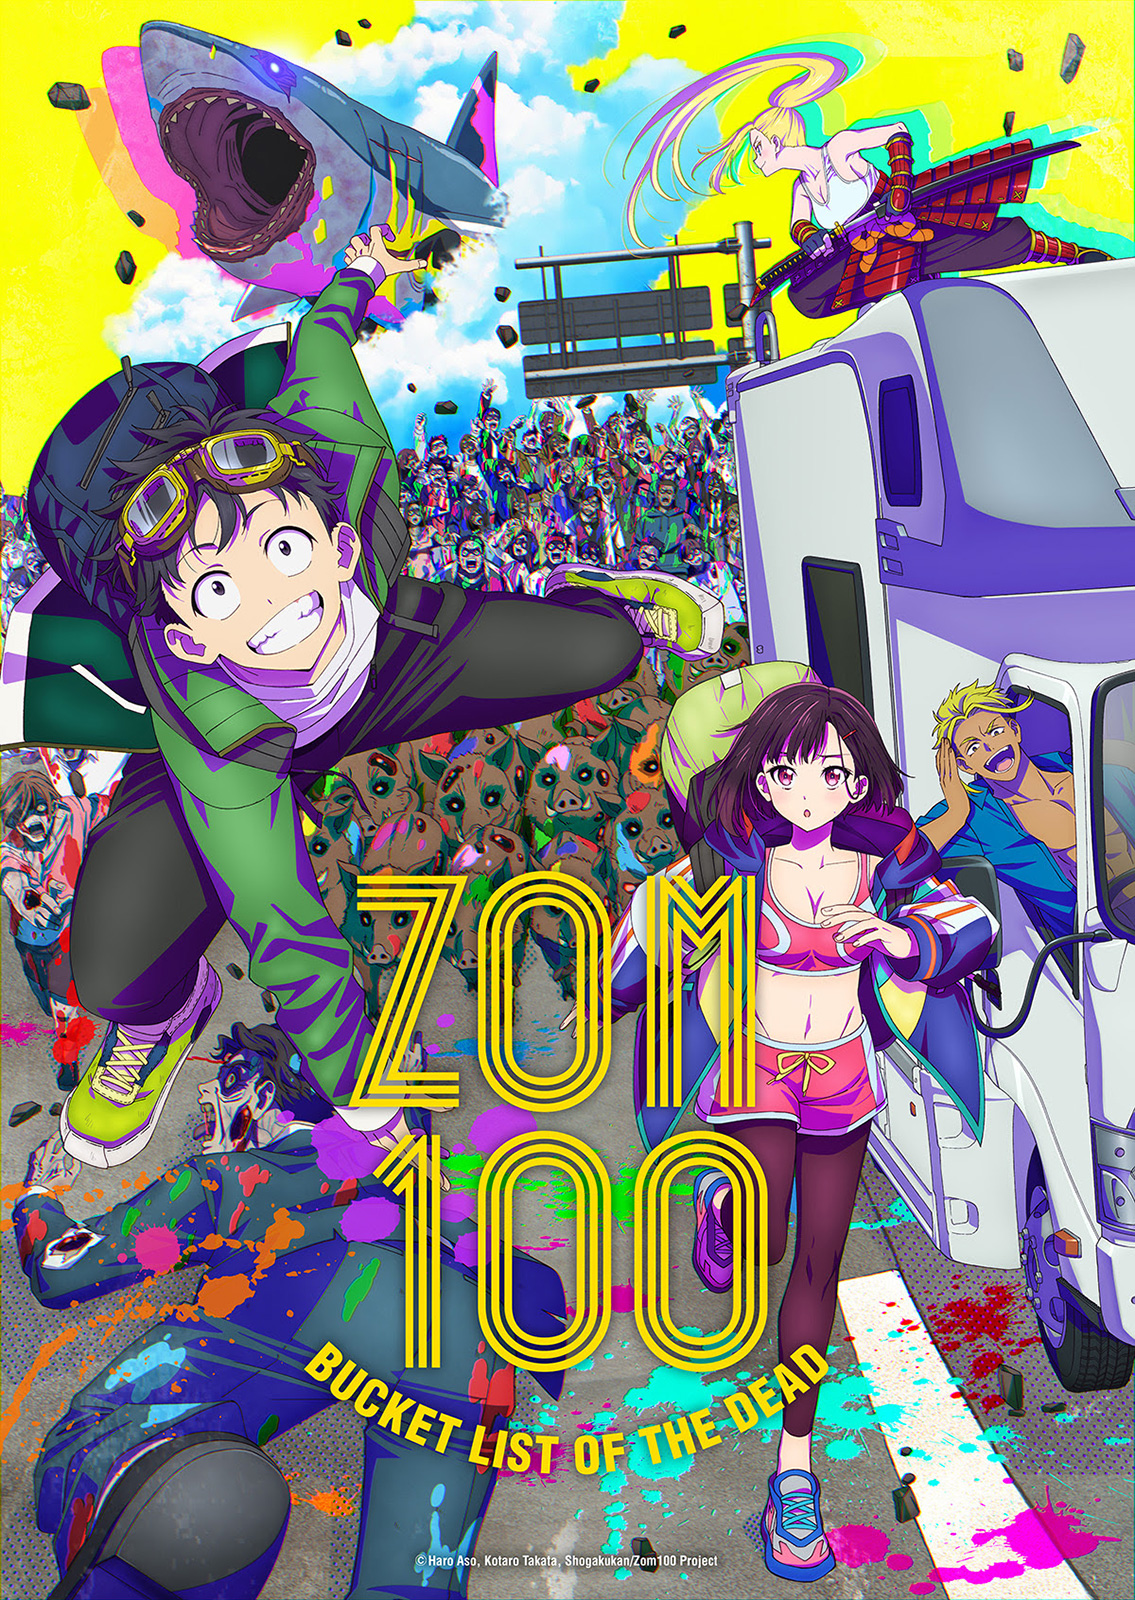 Zom 100: Bucket List of the Dead - Série TV 2023 streaming VF gratuit complet